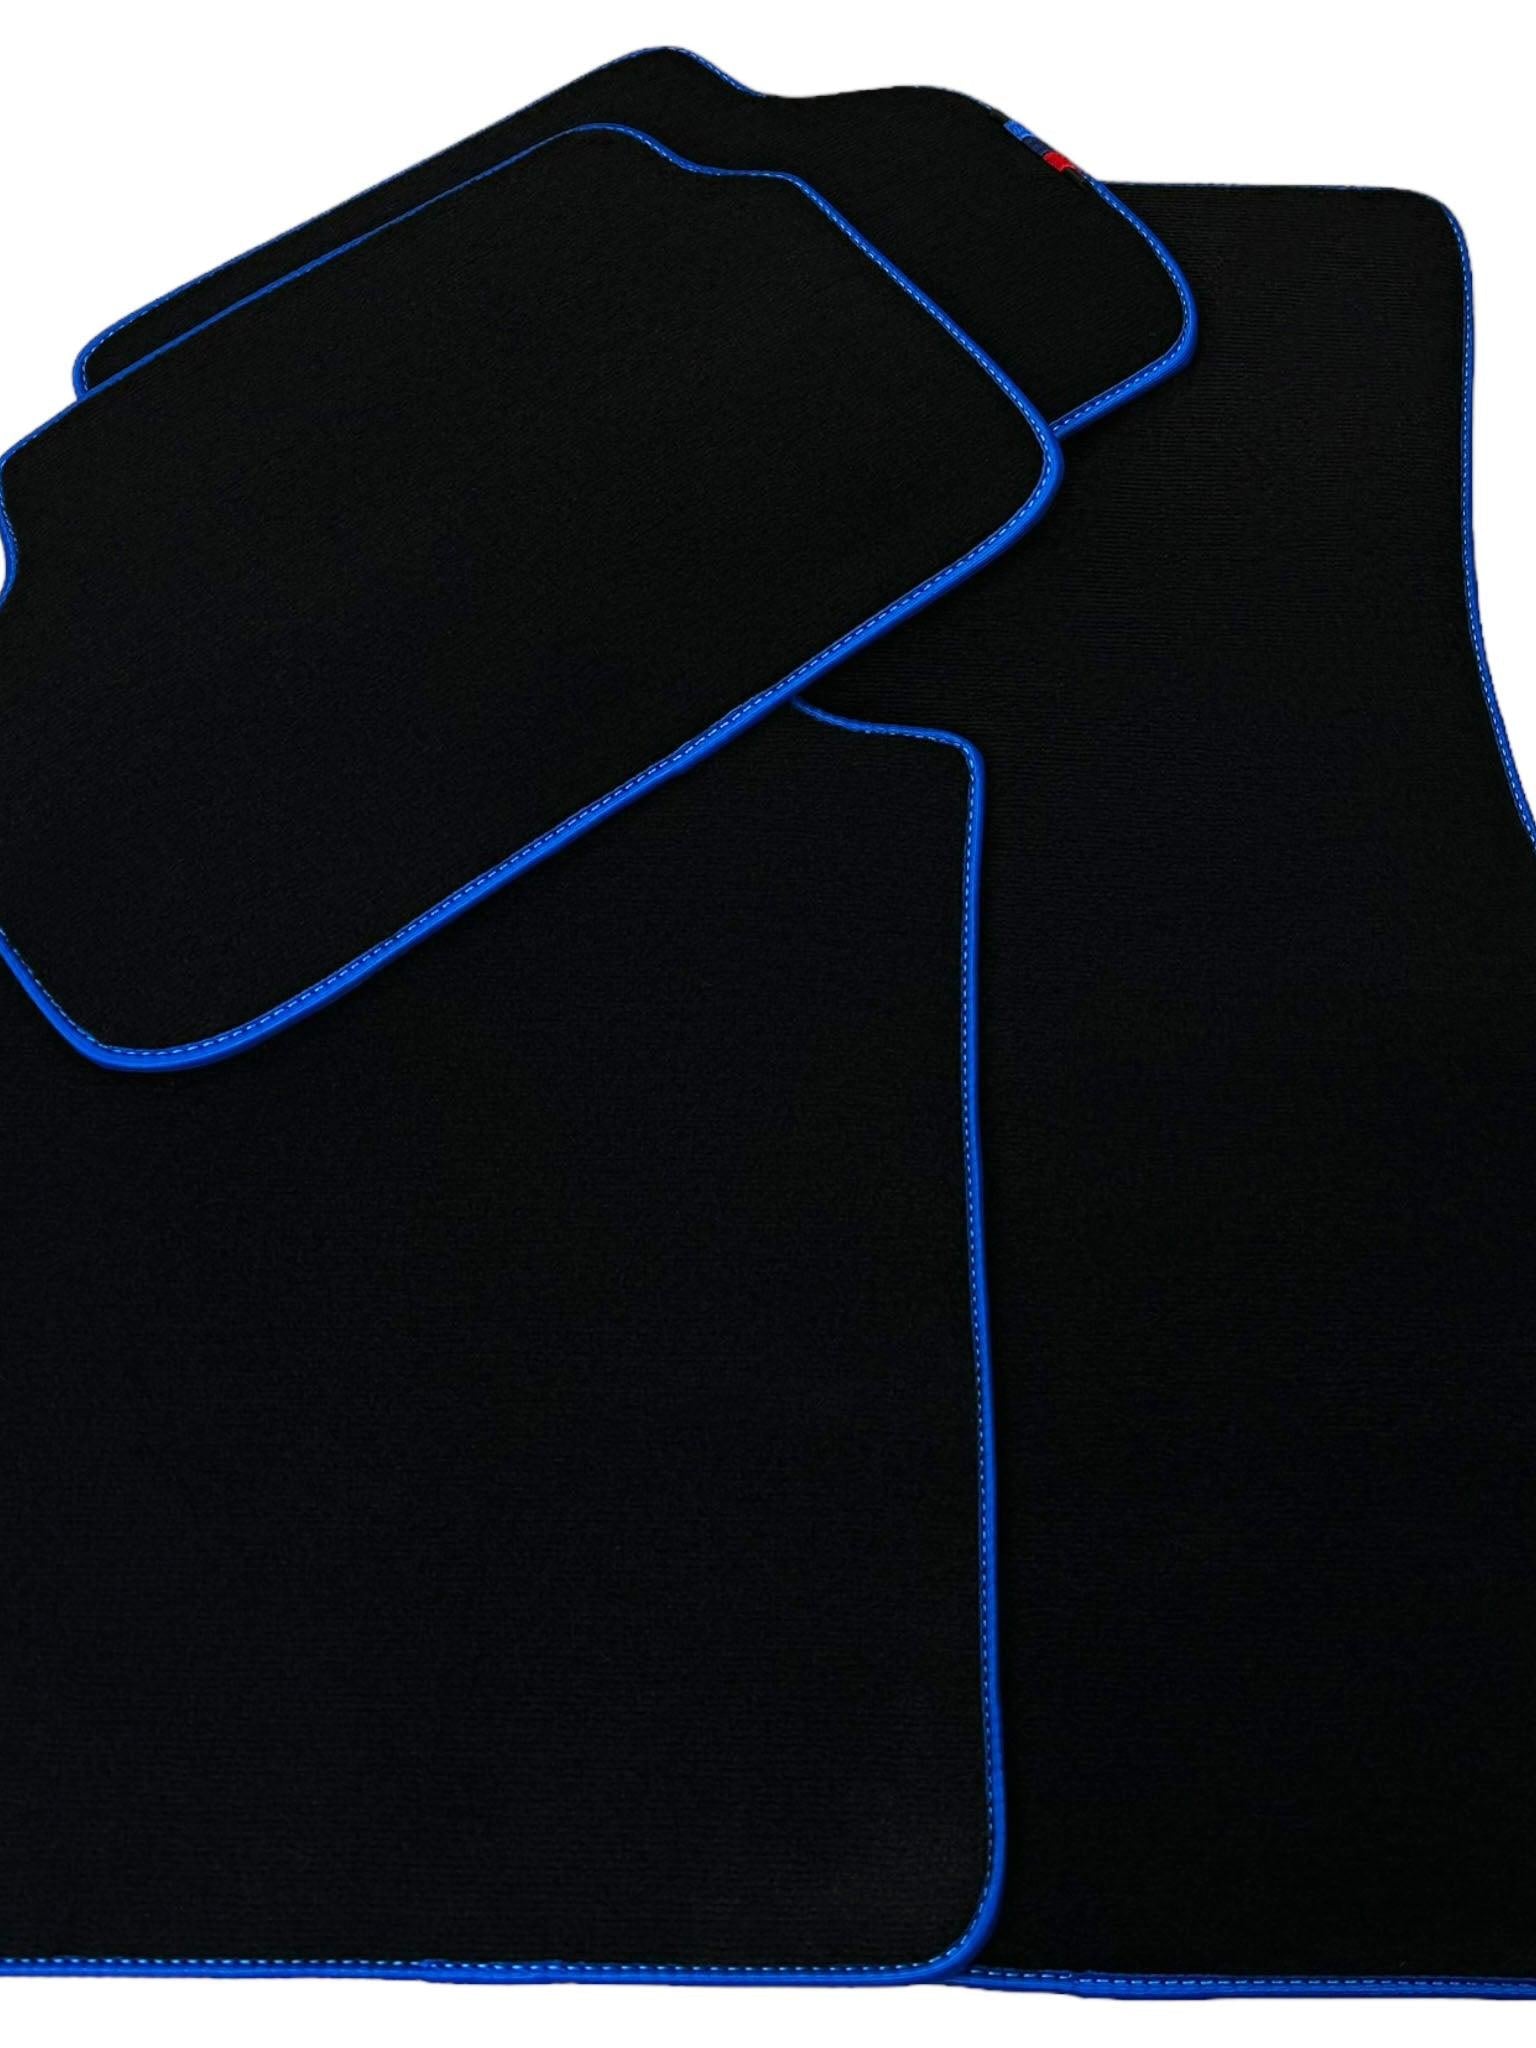 Black Floor Mats For BMW X6 Series F16 | Blue Trim